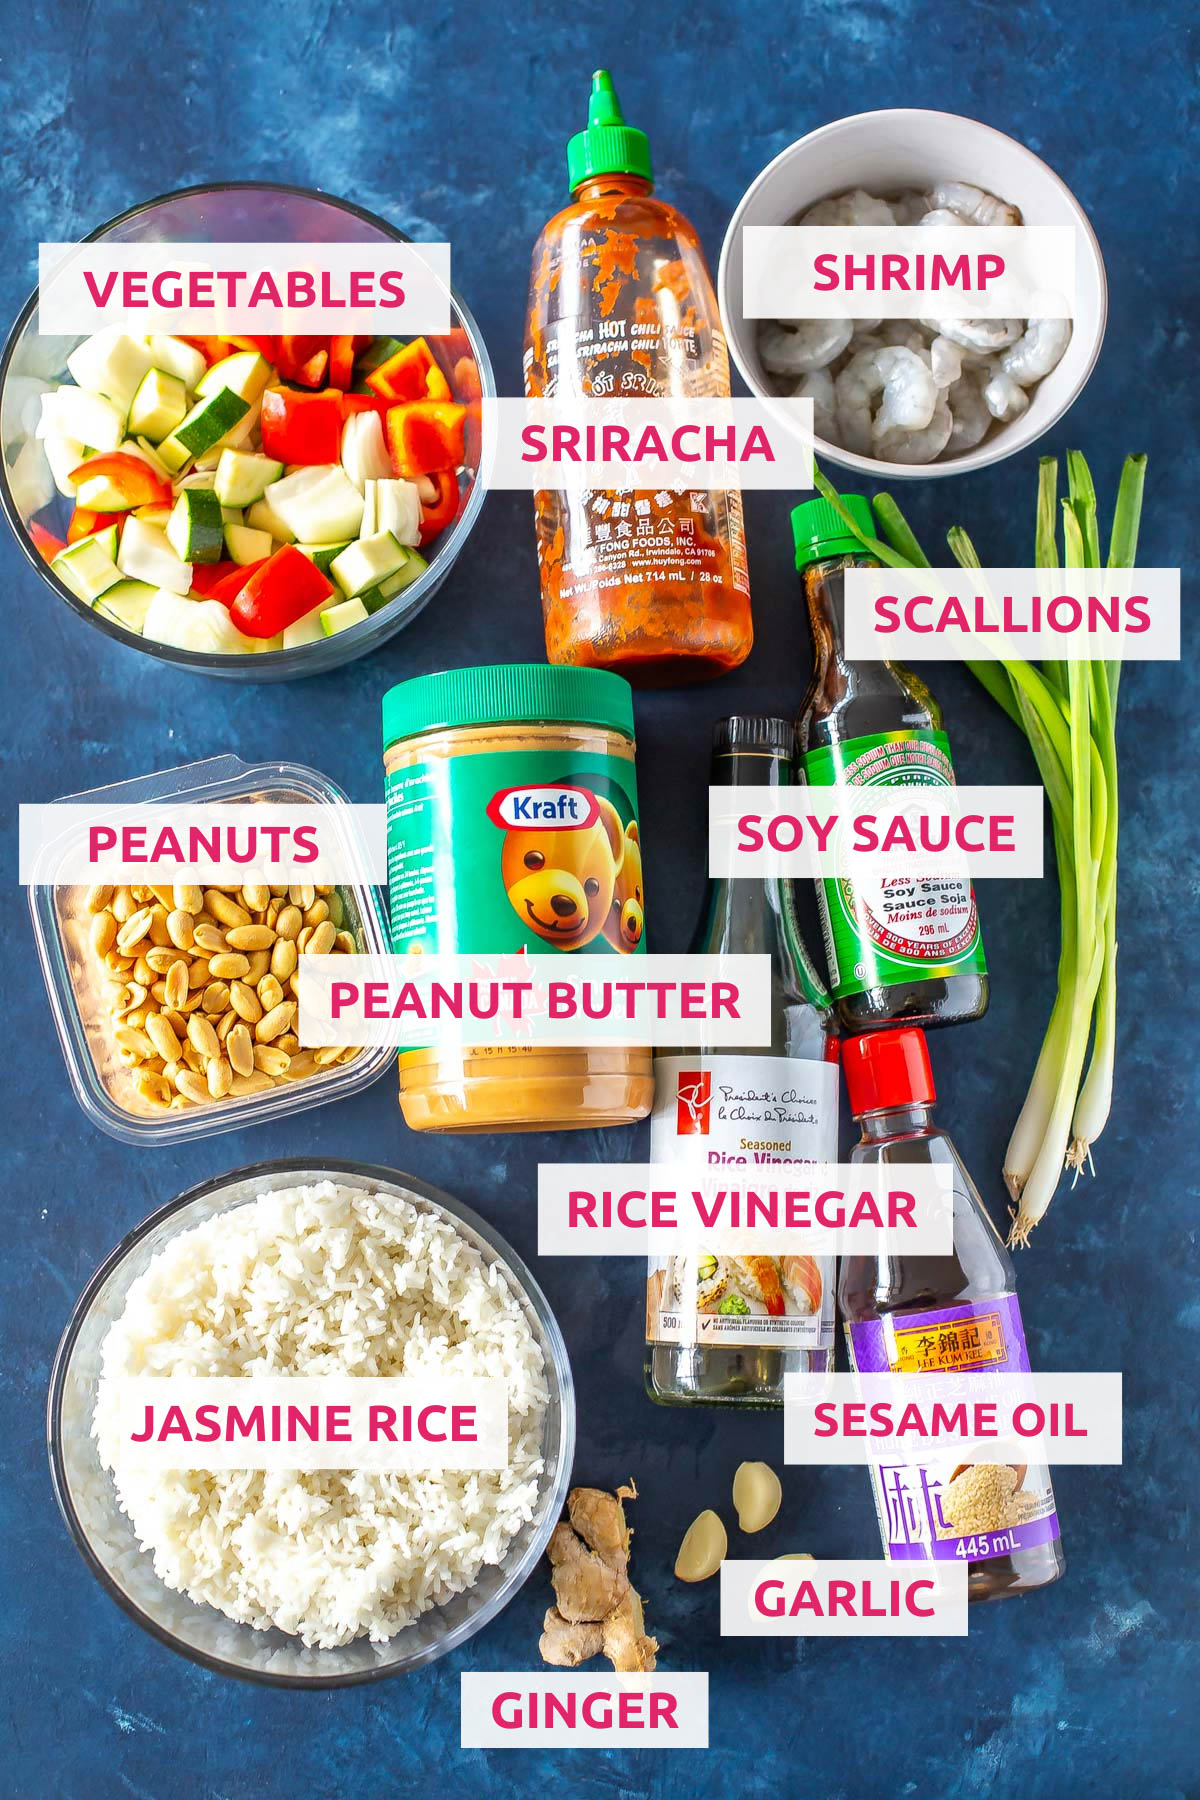 Ingredients for kung pao shrimp: shrimp, vegetables, sriracha, peanuts, peanut butter, soy sauce, scallions, jasmine rice, ginger, garlic, rice vinegar and sesame oil.